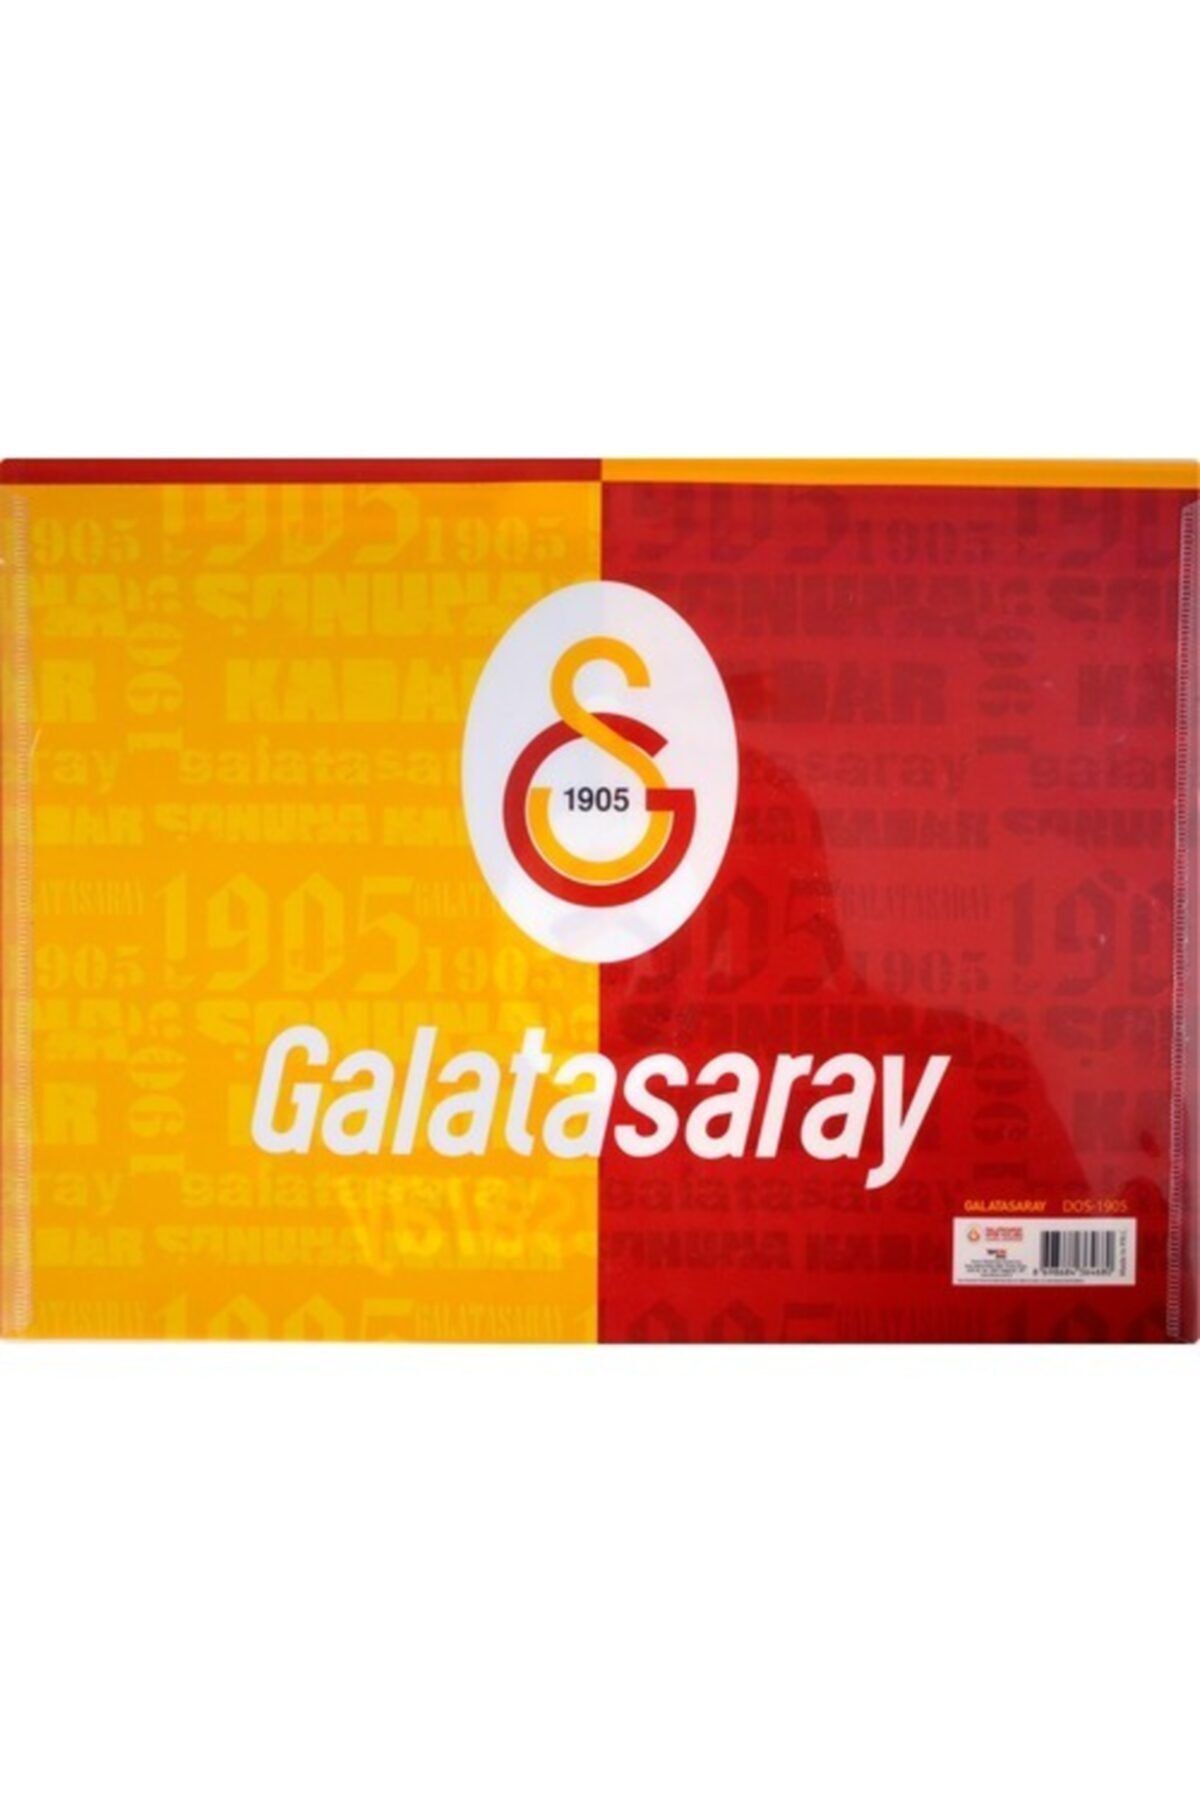 Galatasaray Tmn Galatasaray Çıtçıtlı Dosya Dos-1905 464500 (12 Li Paket)